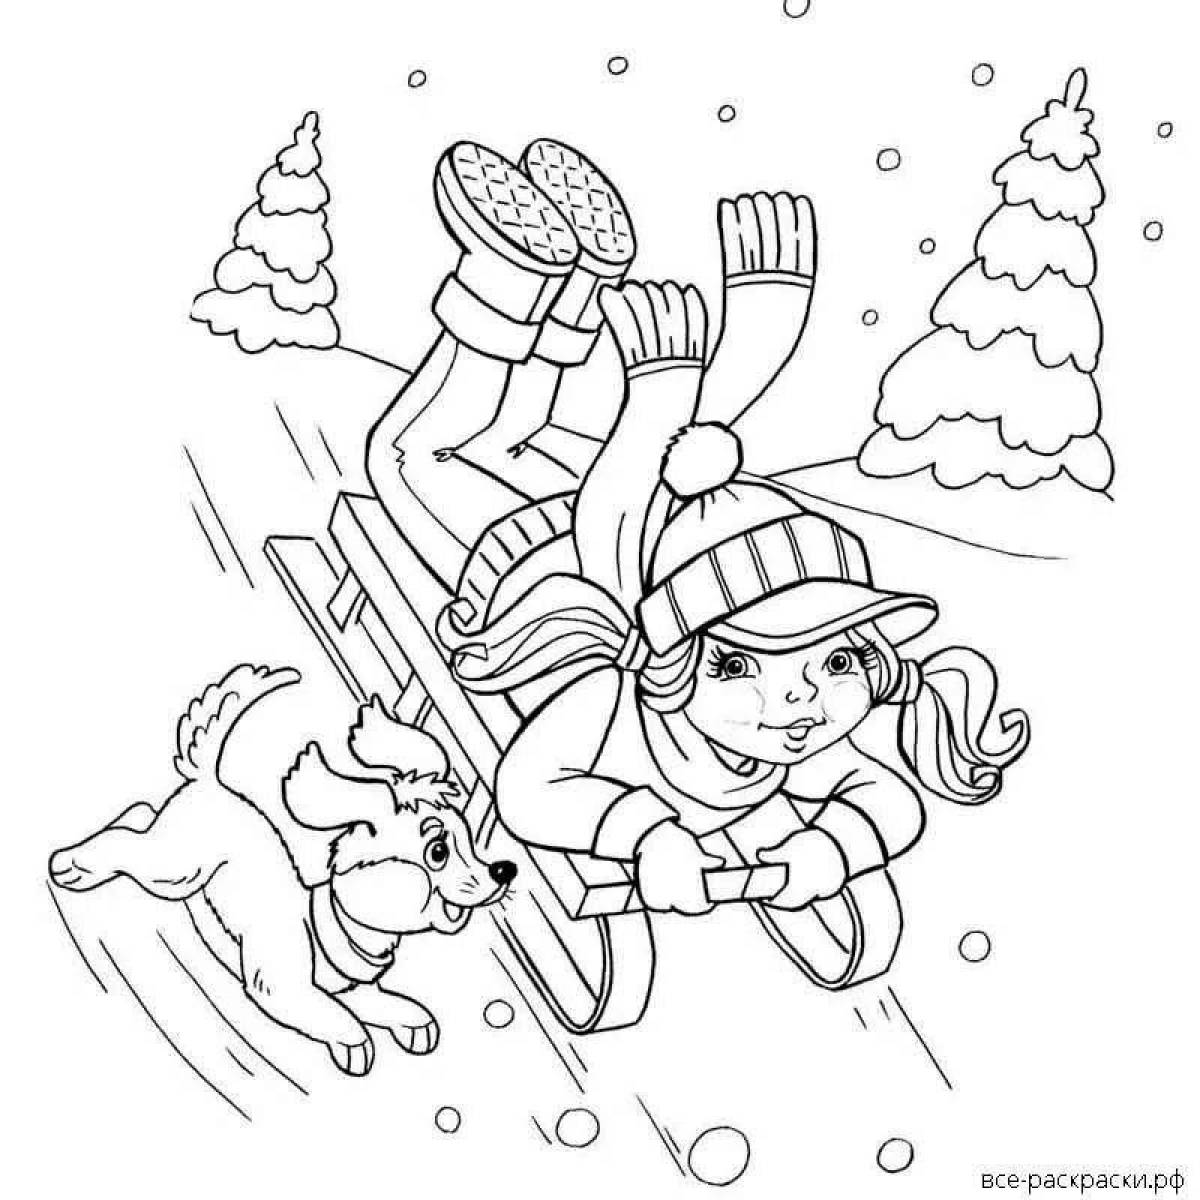 Magic coloring winter fun for kids 5 years old